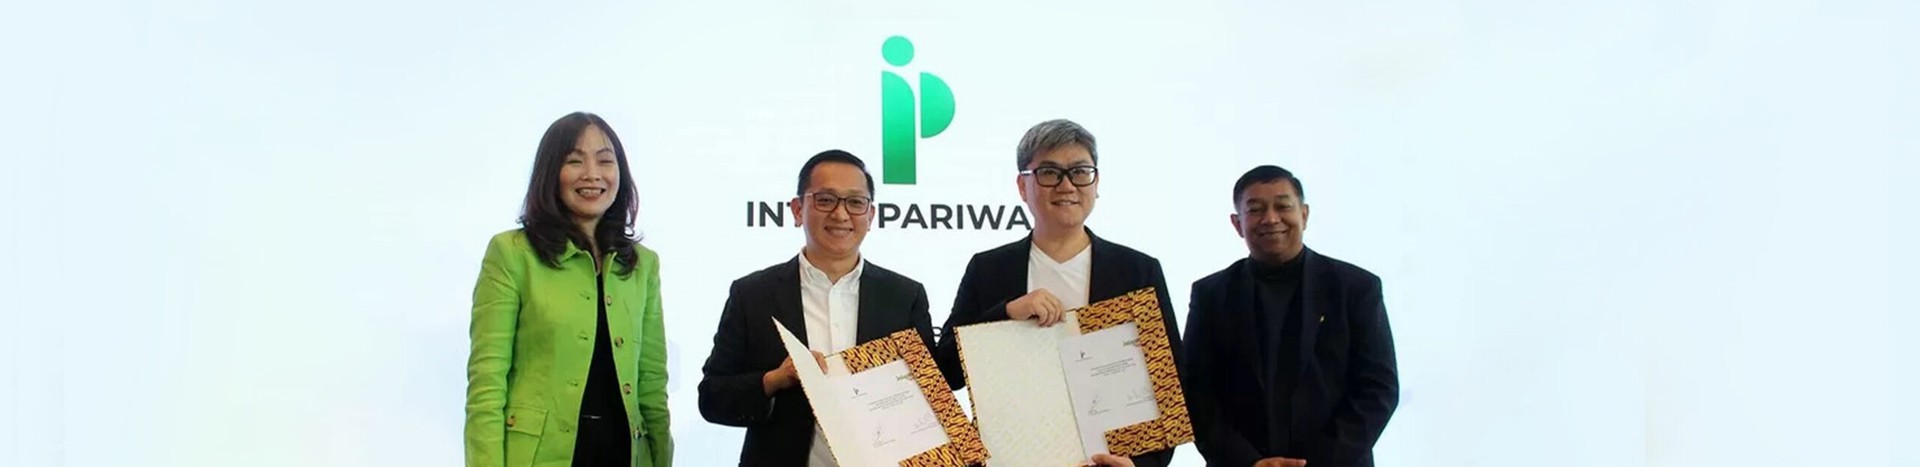 Intan Pariwara Group Announces Strategic Acquisition of mySecondTeacher’s “Jelajah Ilmu”